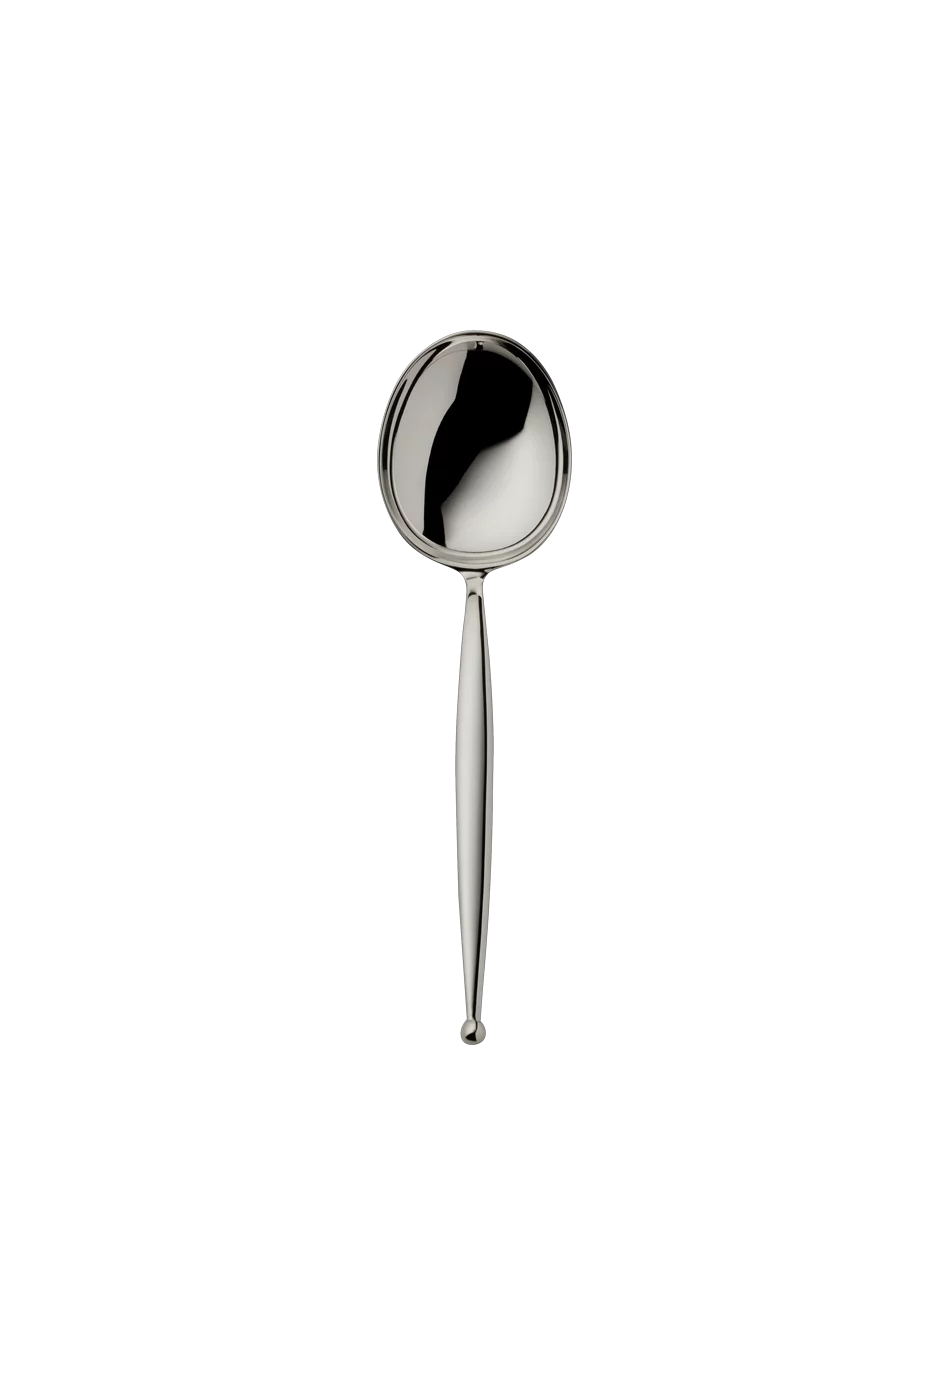 Gio Cream Spoon (Broth Spoon) (150g massive silverplated)